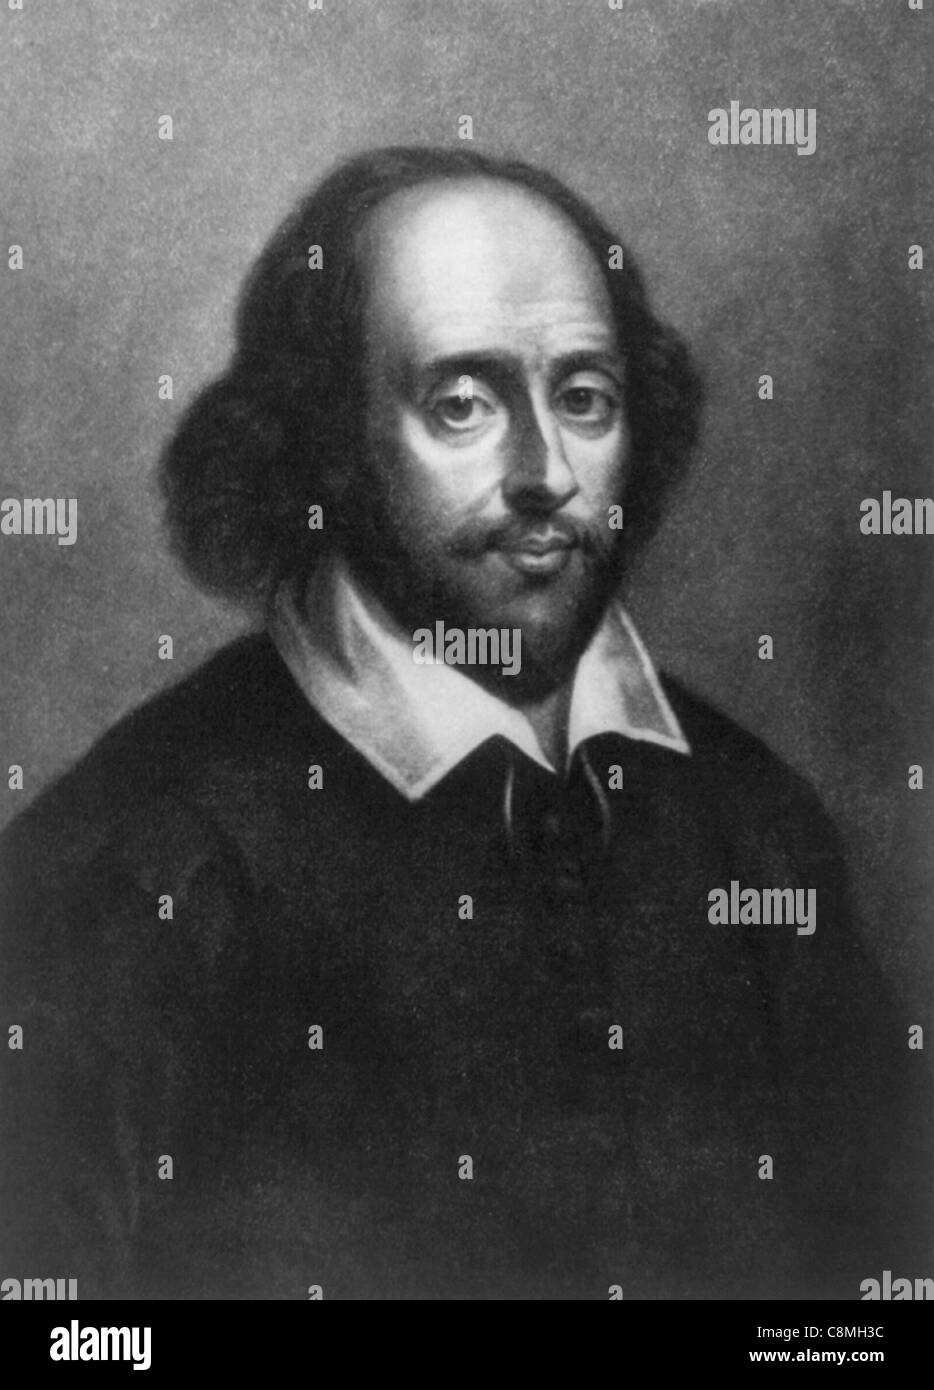 William Shakespeare, English poet and playwright. Stock Photo